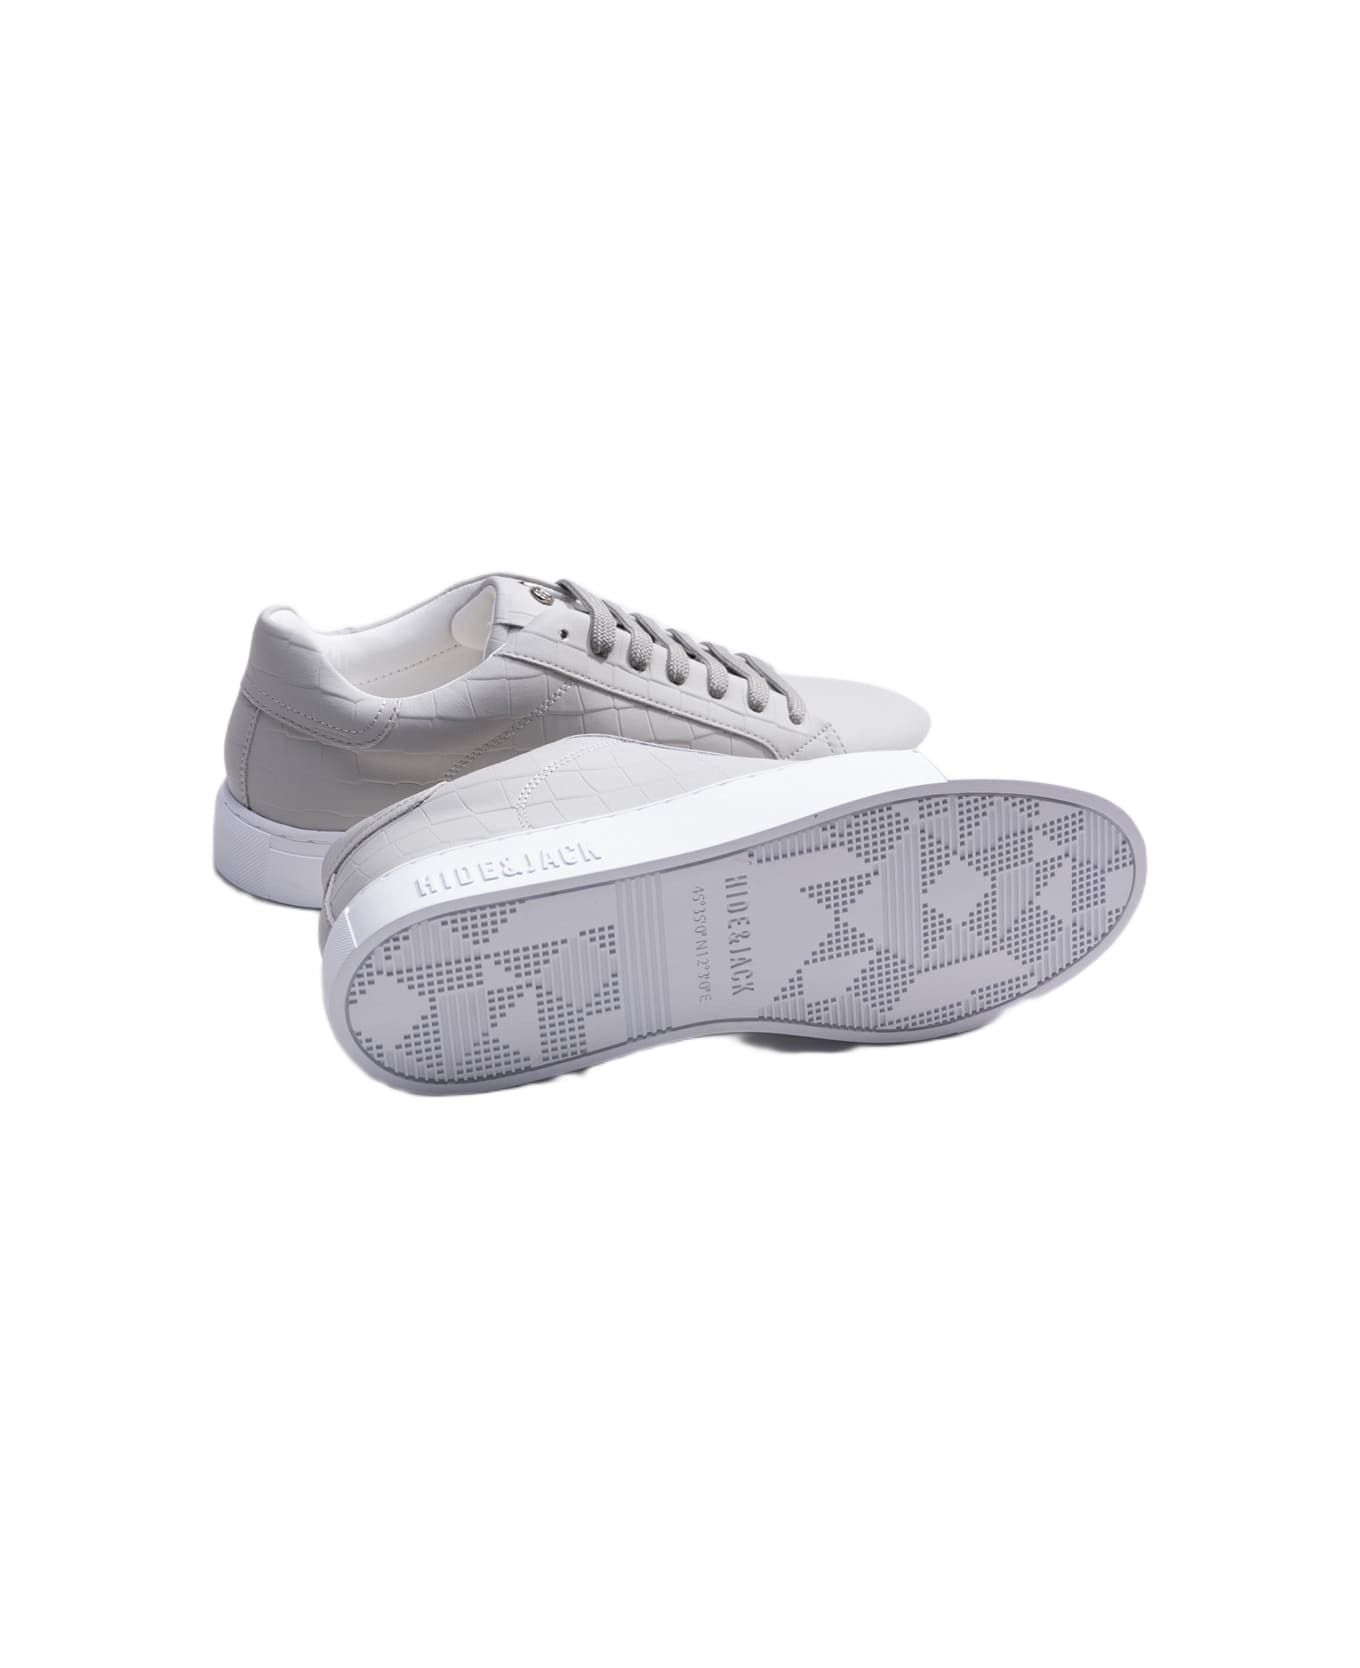 Hide&Jack Low Top Sneaker - Essence Grey White